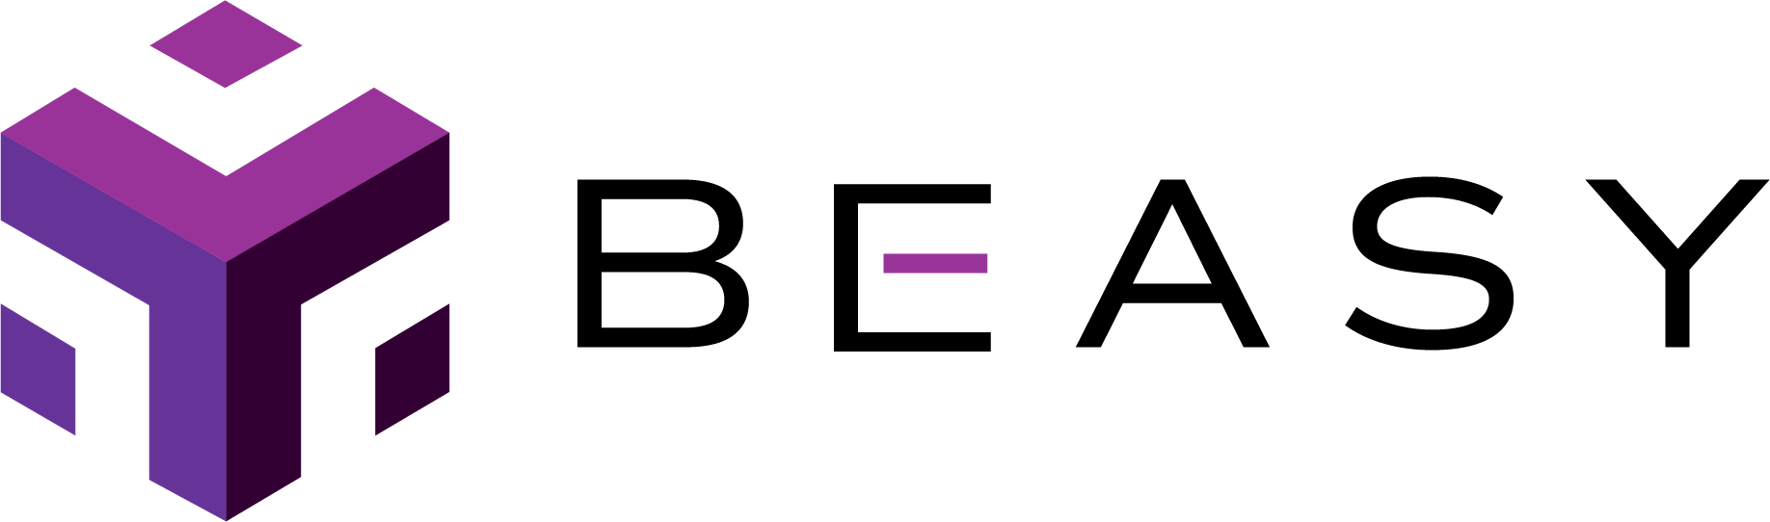 BEASY Logo